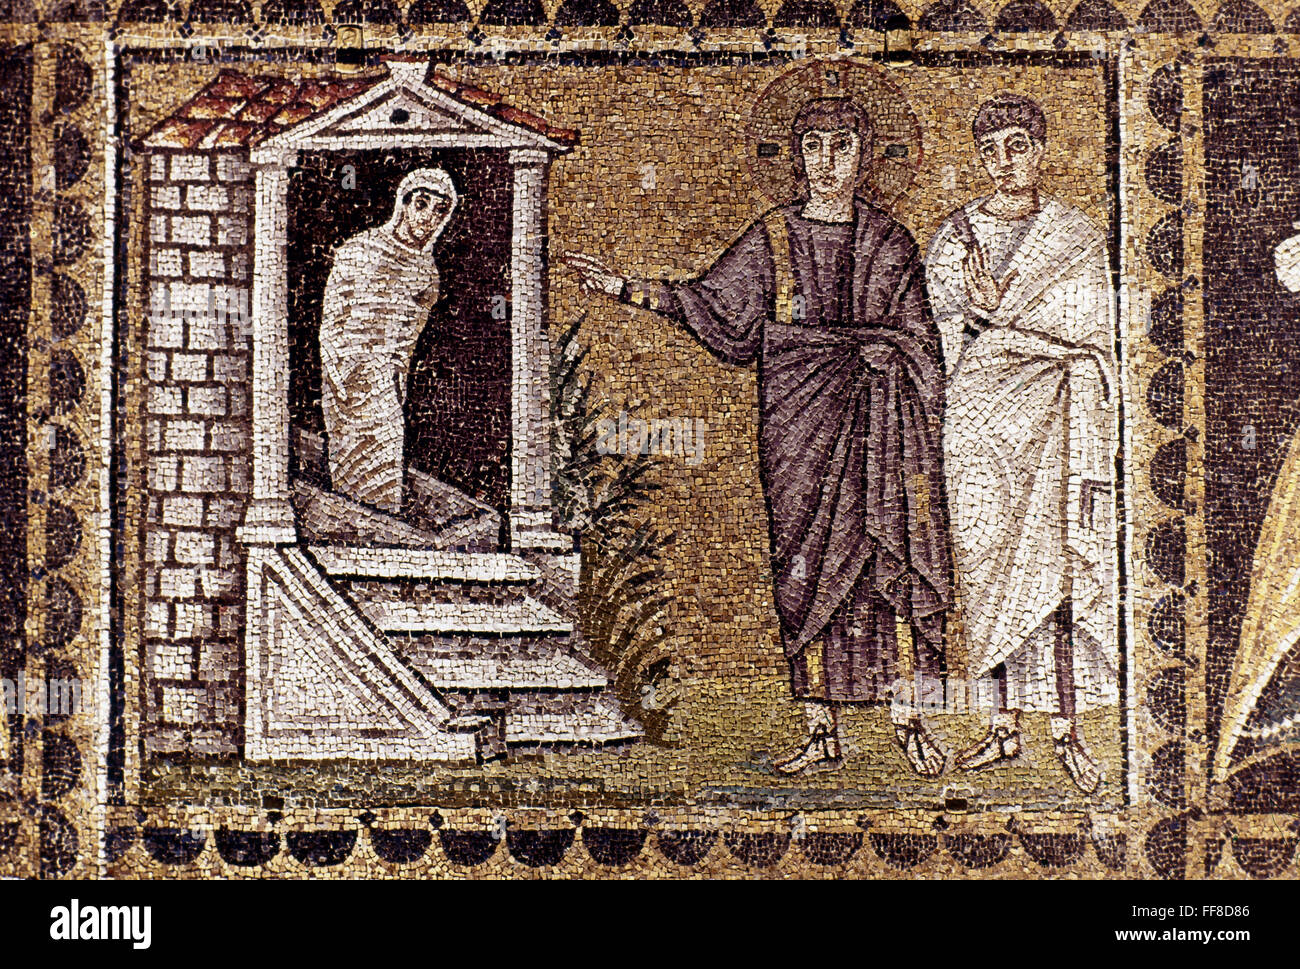 THE RAISING OF LAZARUS: /nmid-6th century mosaic from Basilica of Saint Apollinare Nuovo, Ravenna, Italy. Stock Photo